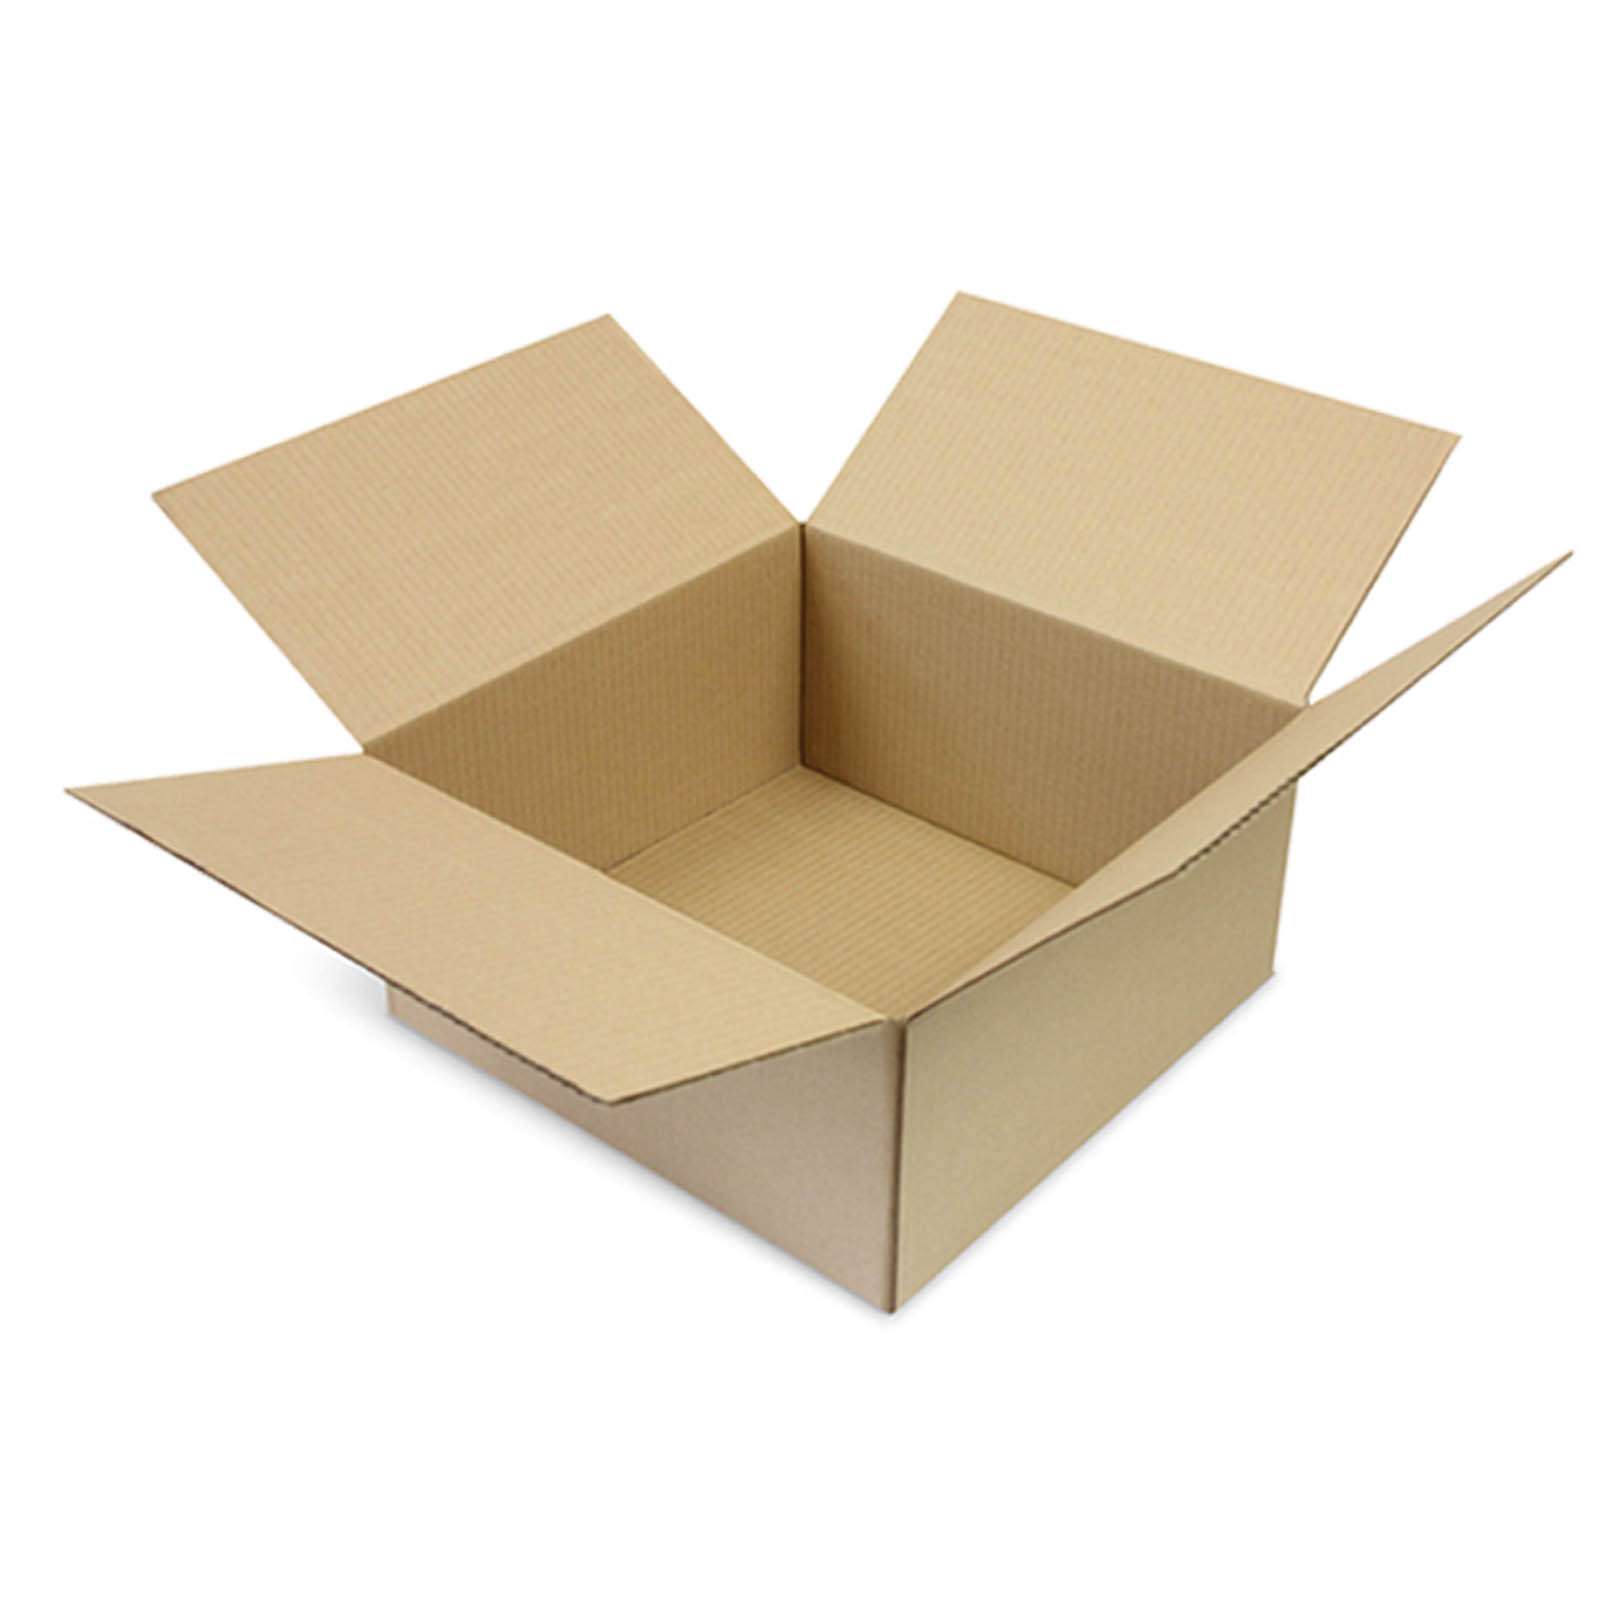 Cardboard box 300x300x150 mm - with digital print 2-sided (neigbouring sides)